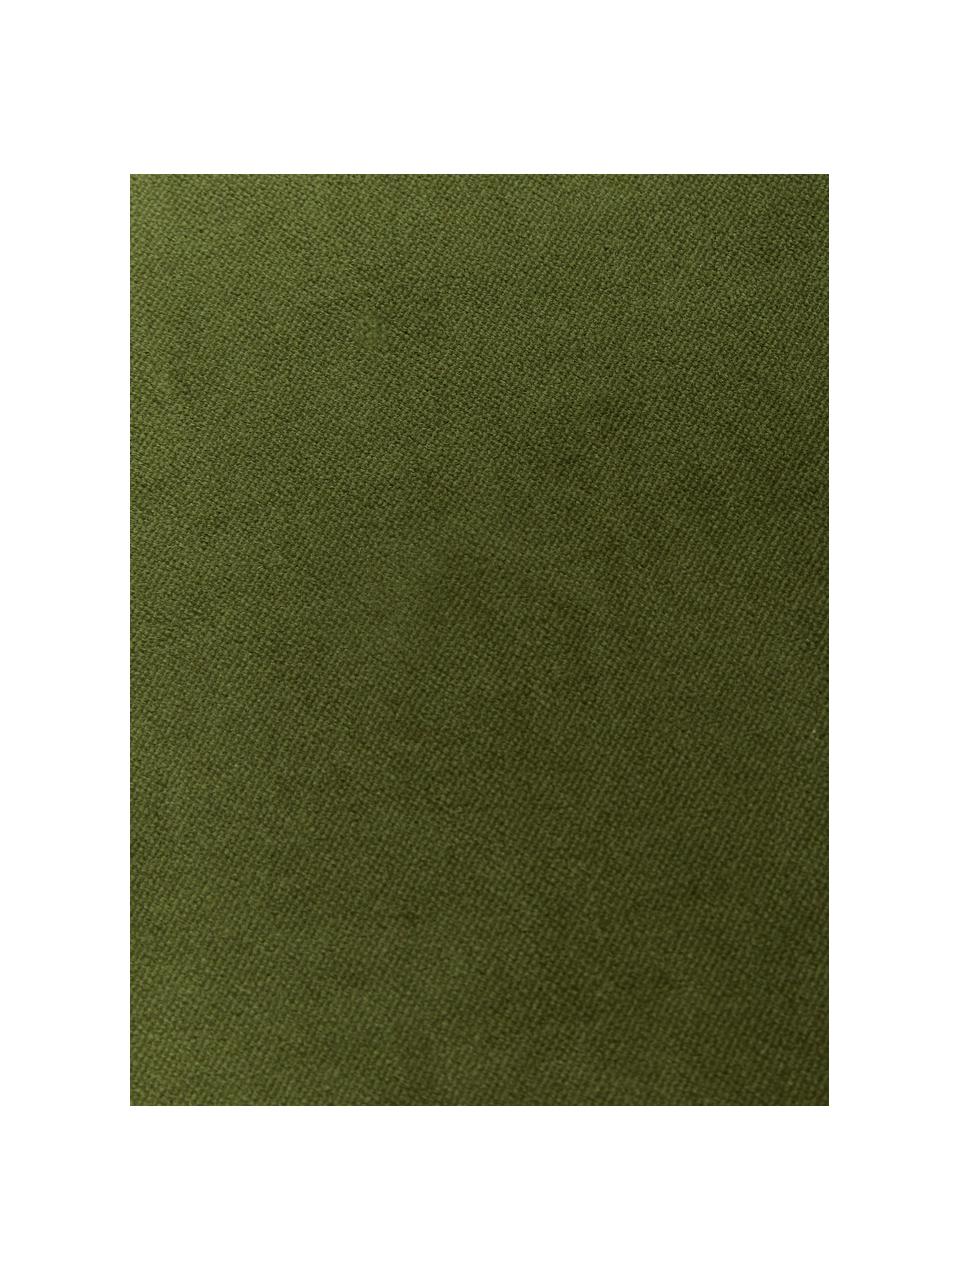 Federa arredo in velluto verde muschio Dana, 100% velluto di cotone, Verde muschio, Larg. 40 x Lung. 40 cm